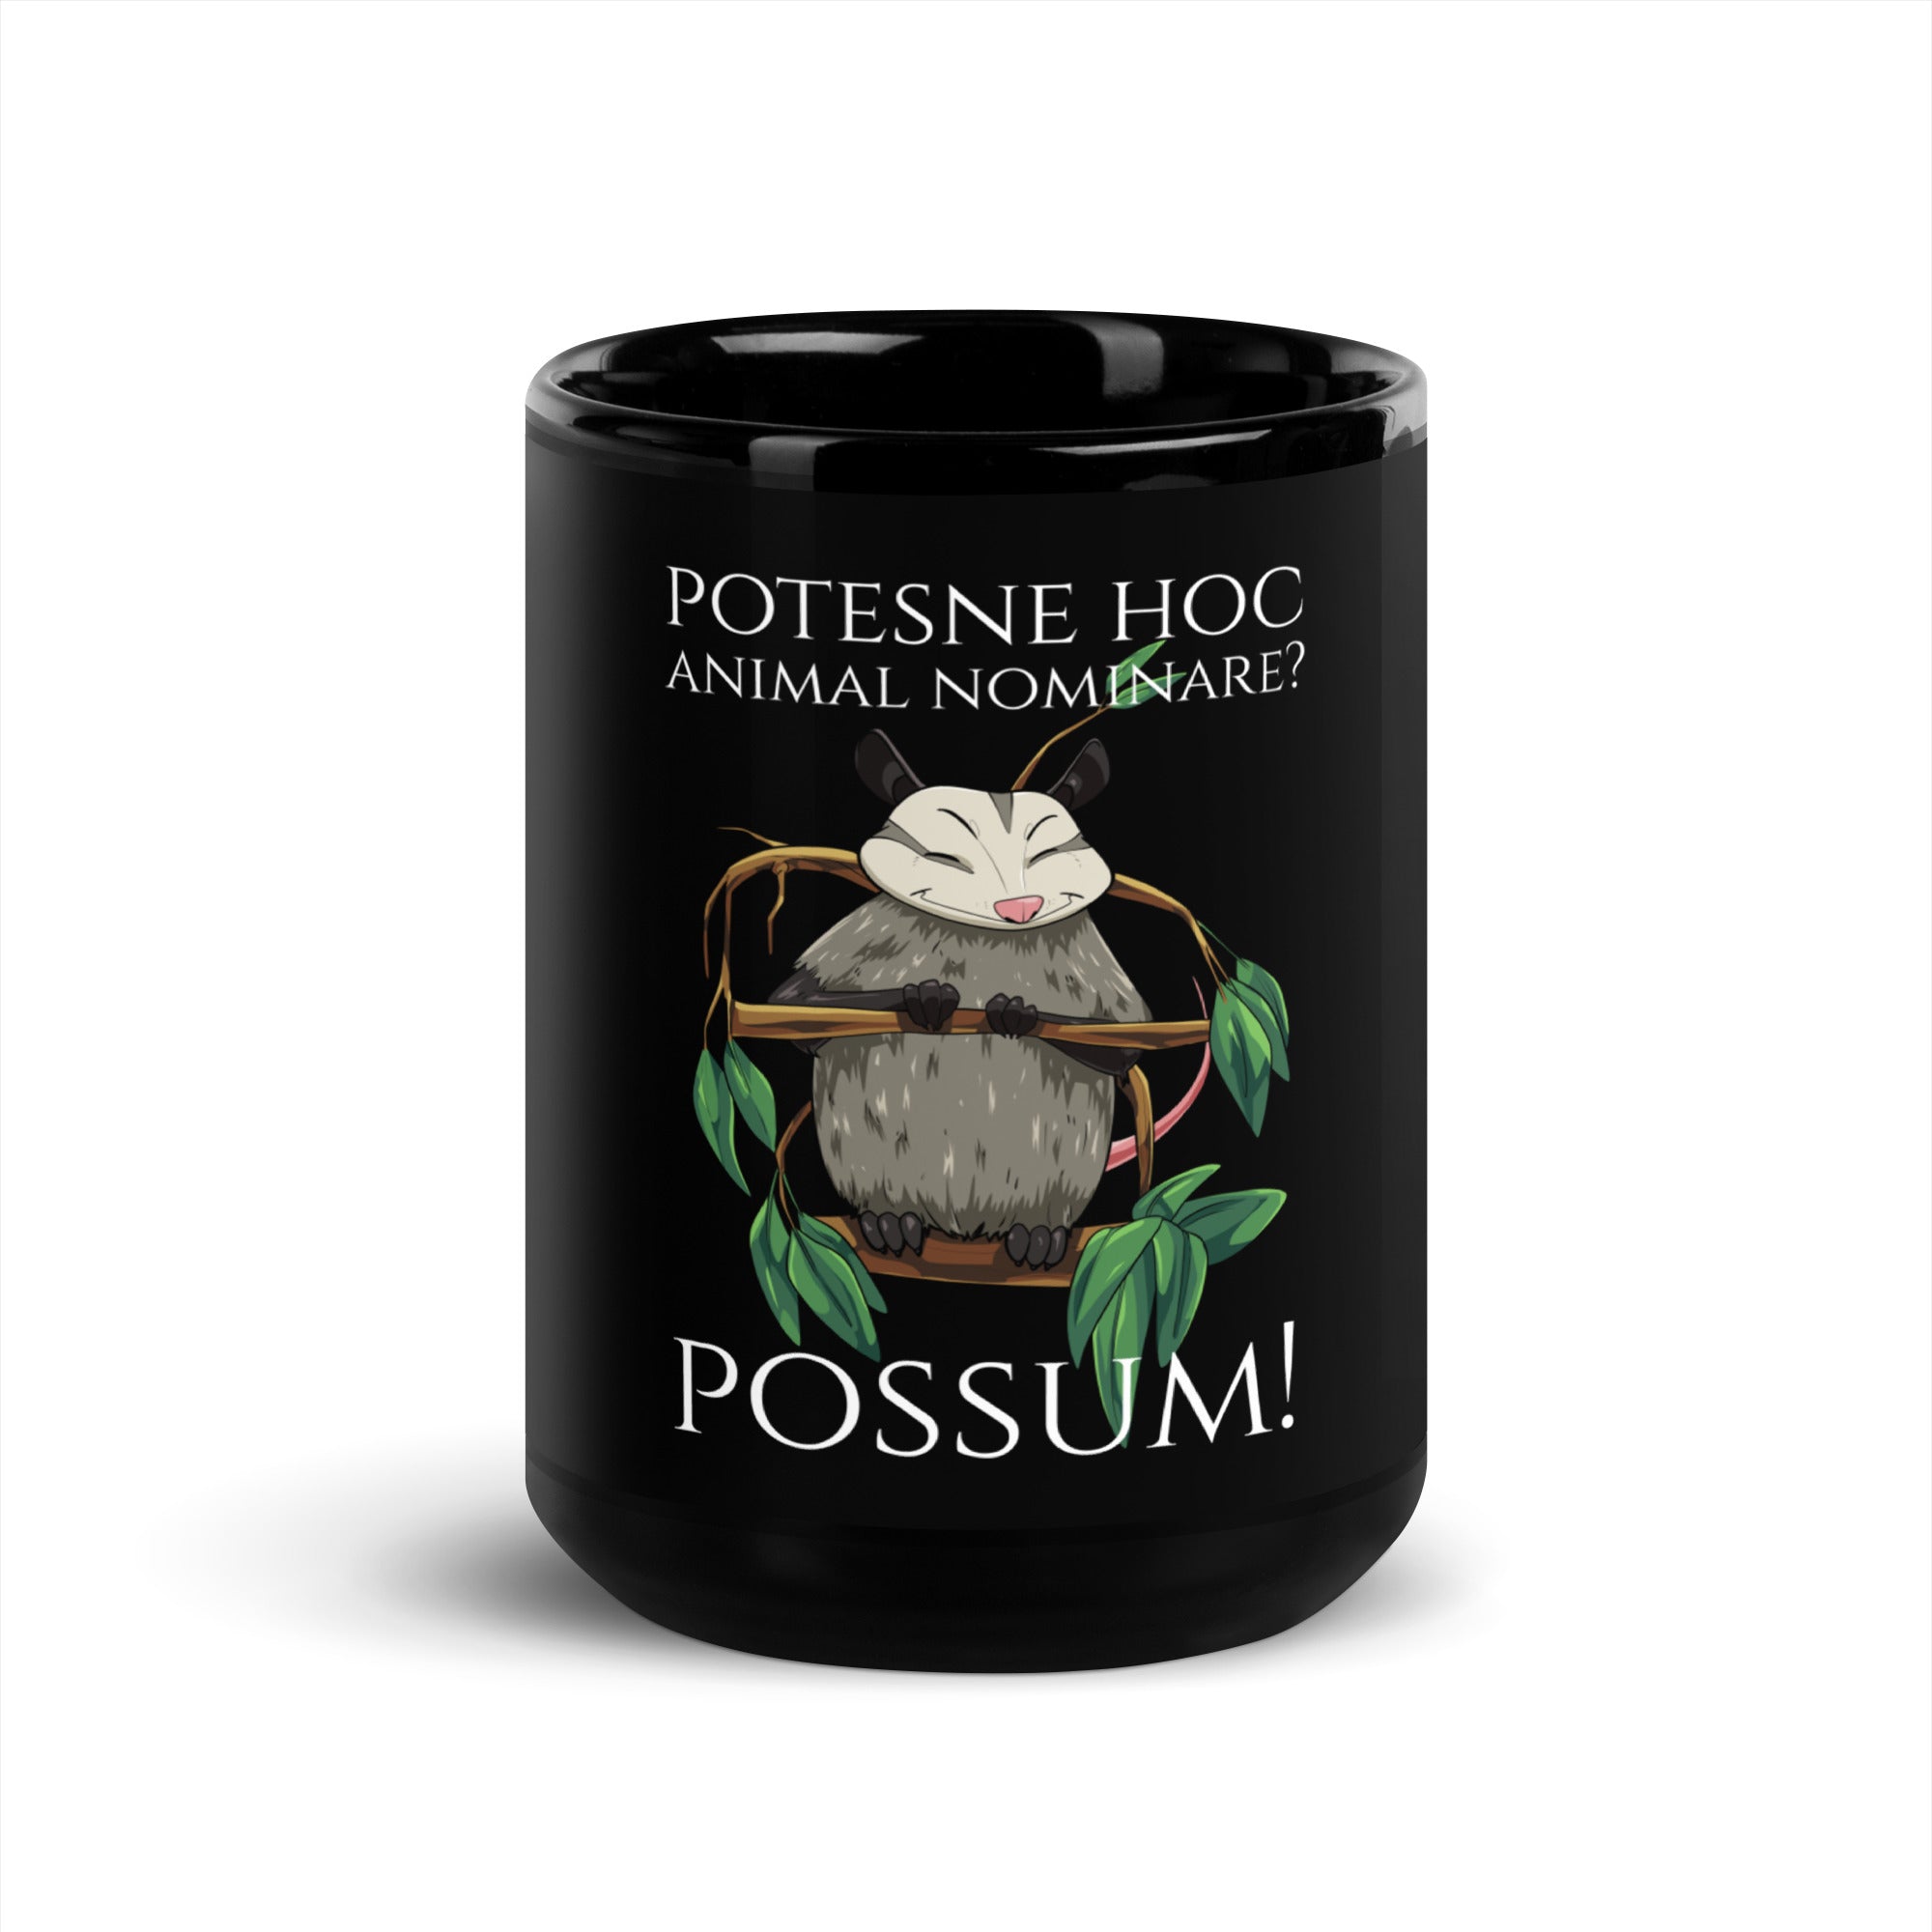 Potesne Hoc Animal Nominare? Possum! - Classical Latin - Black Glossy Mug